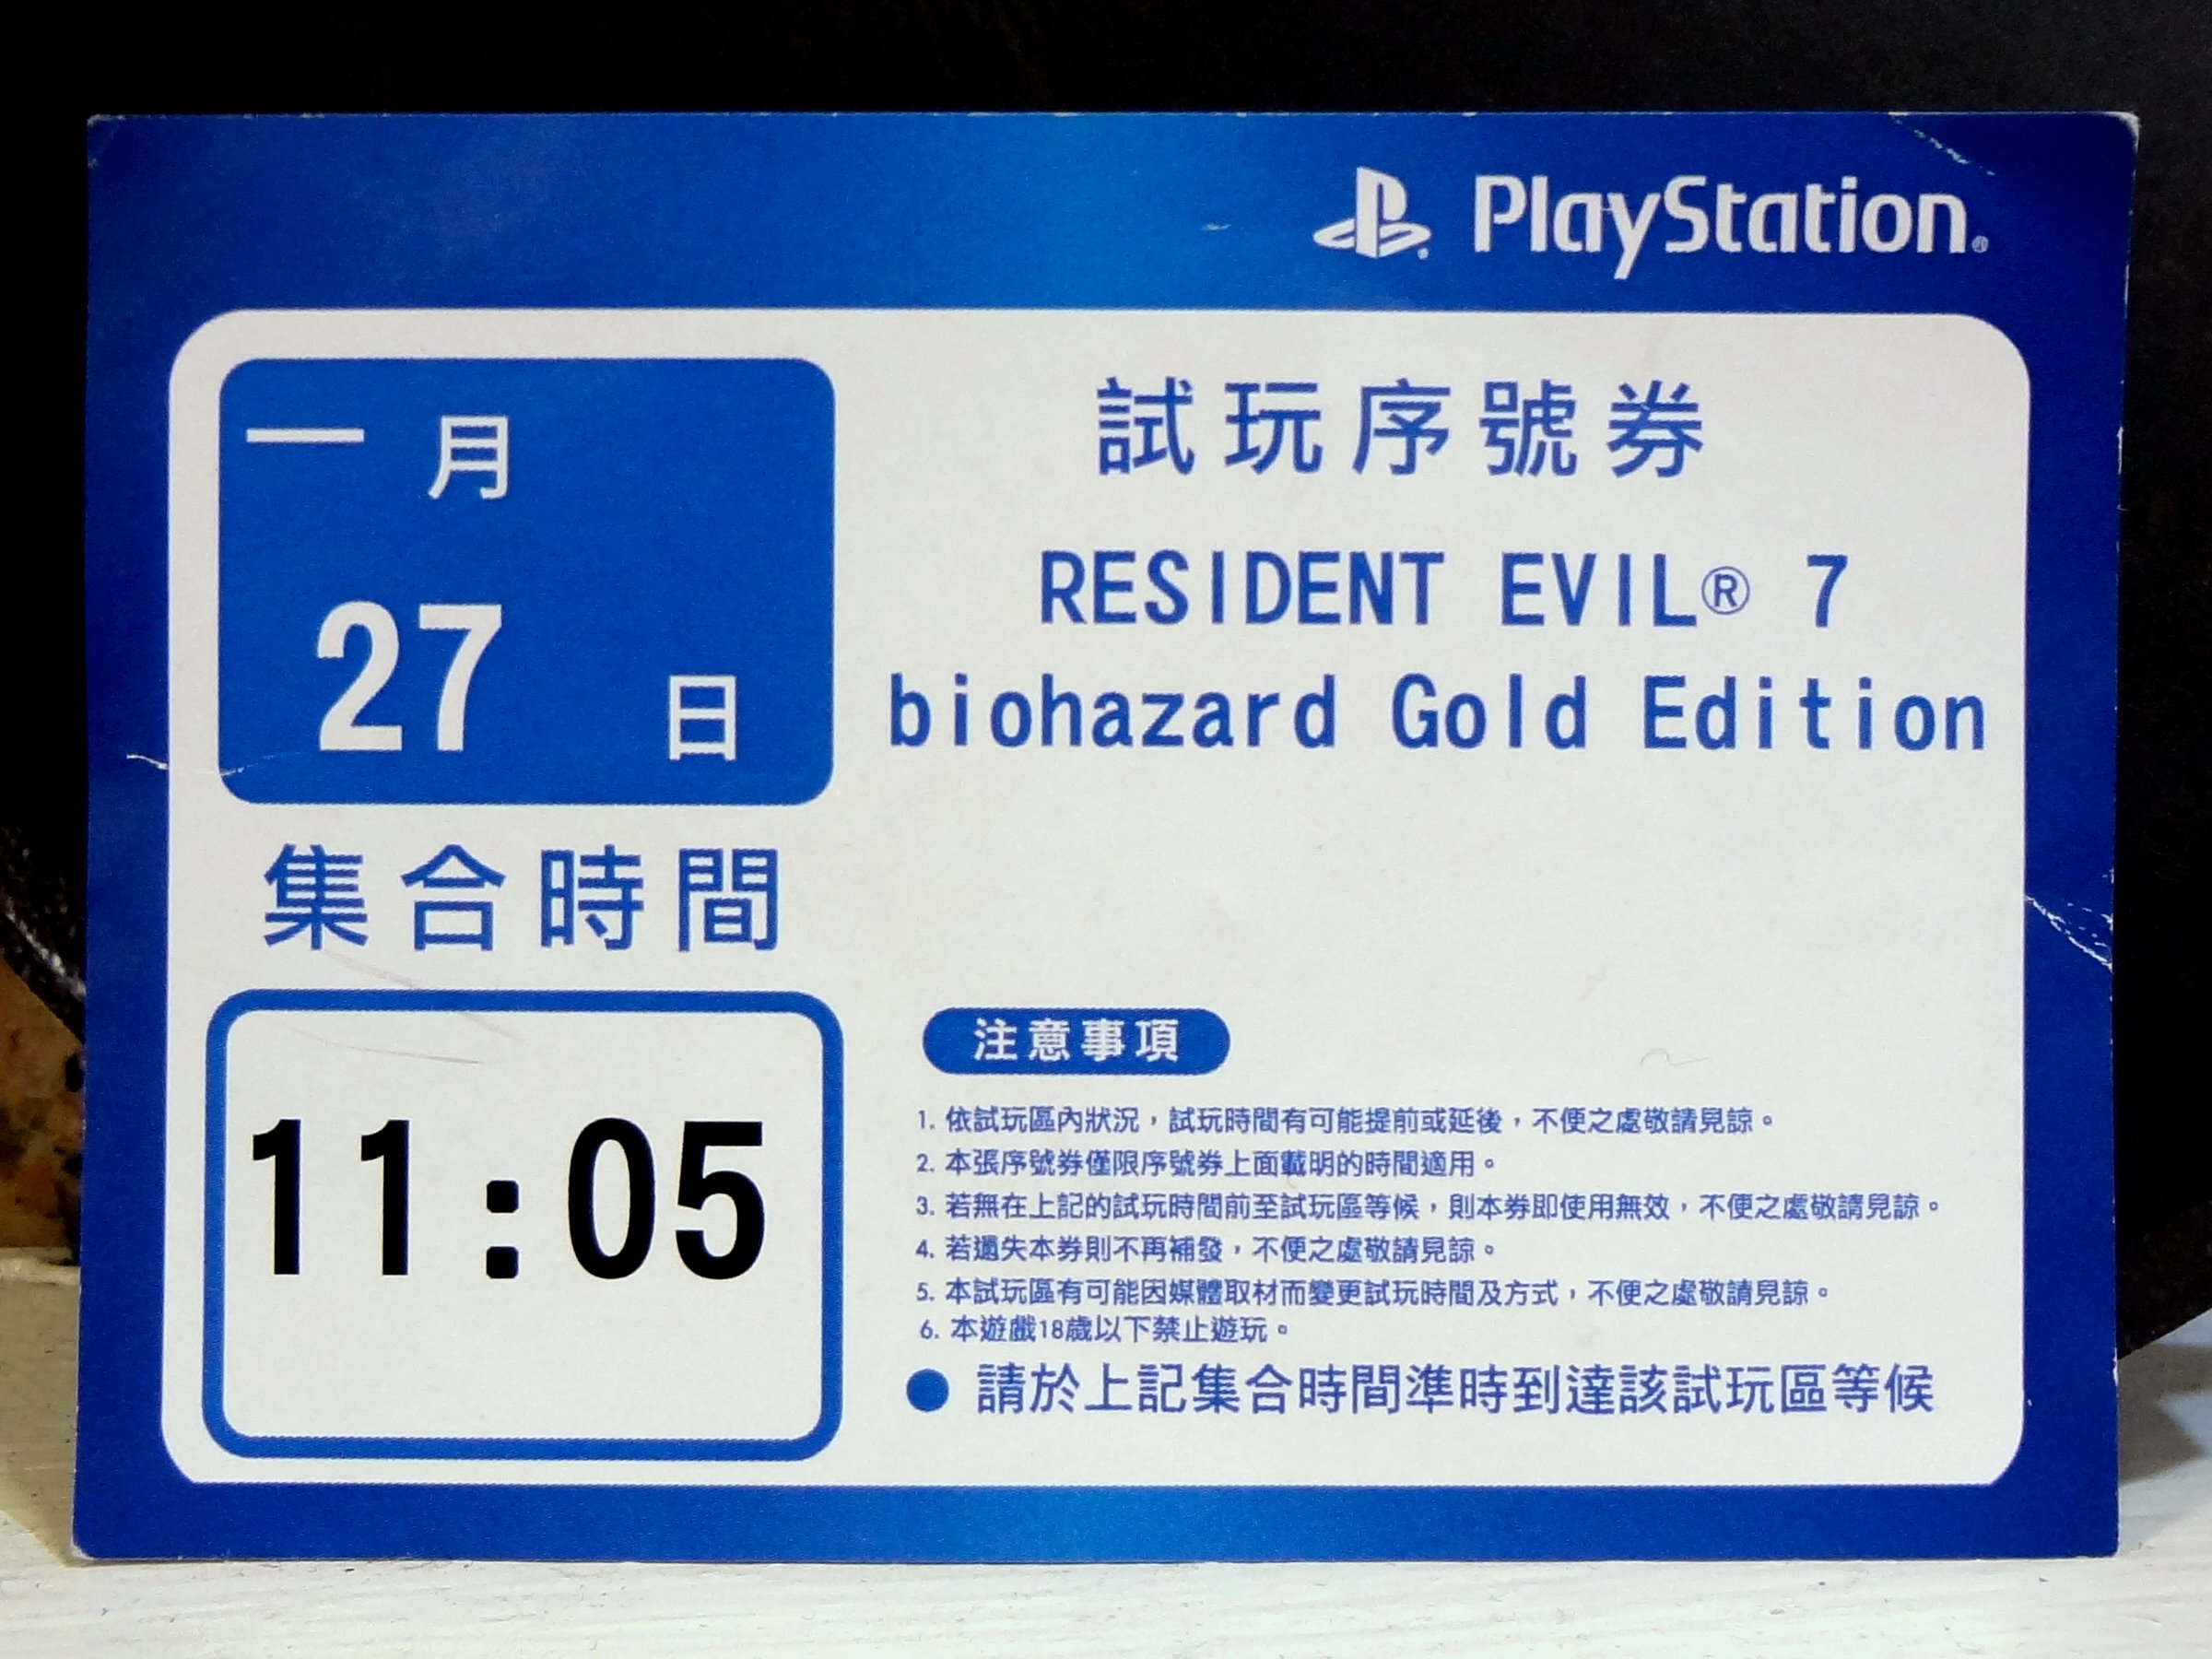 Resident Evil 7: Biohazard - Wikipedia